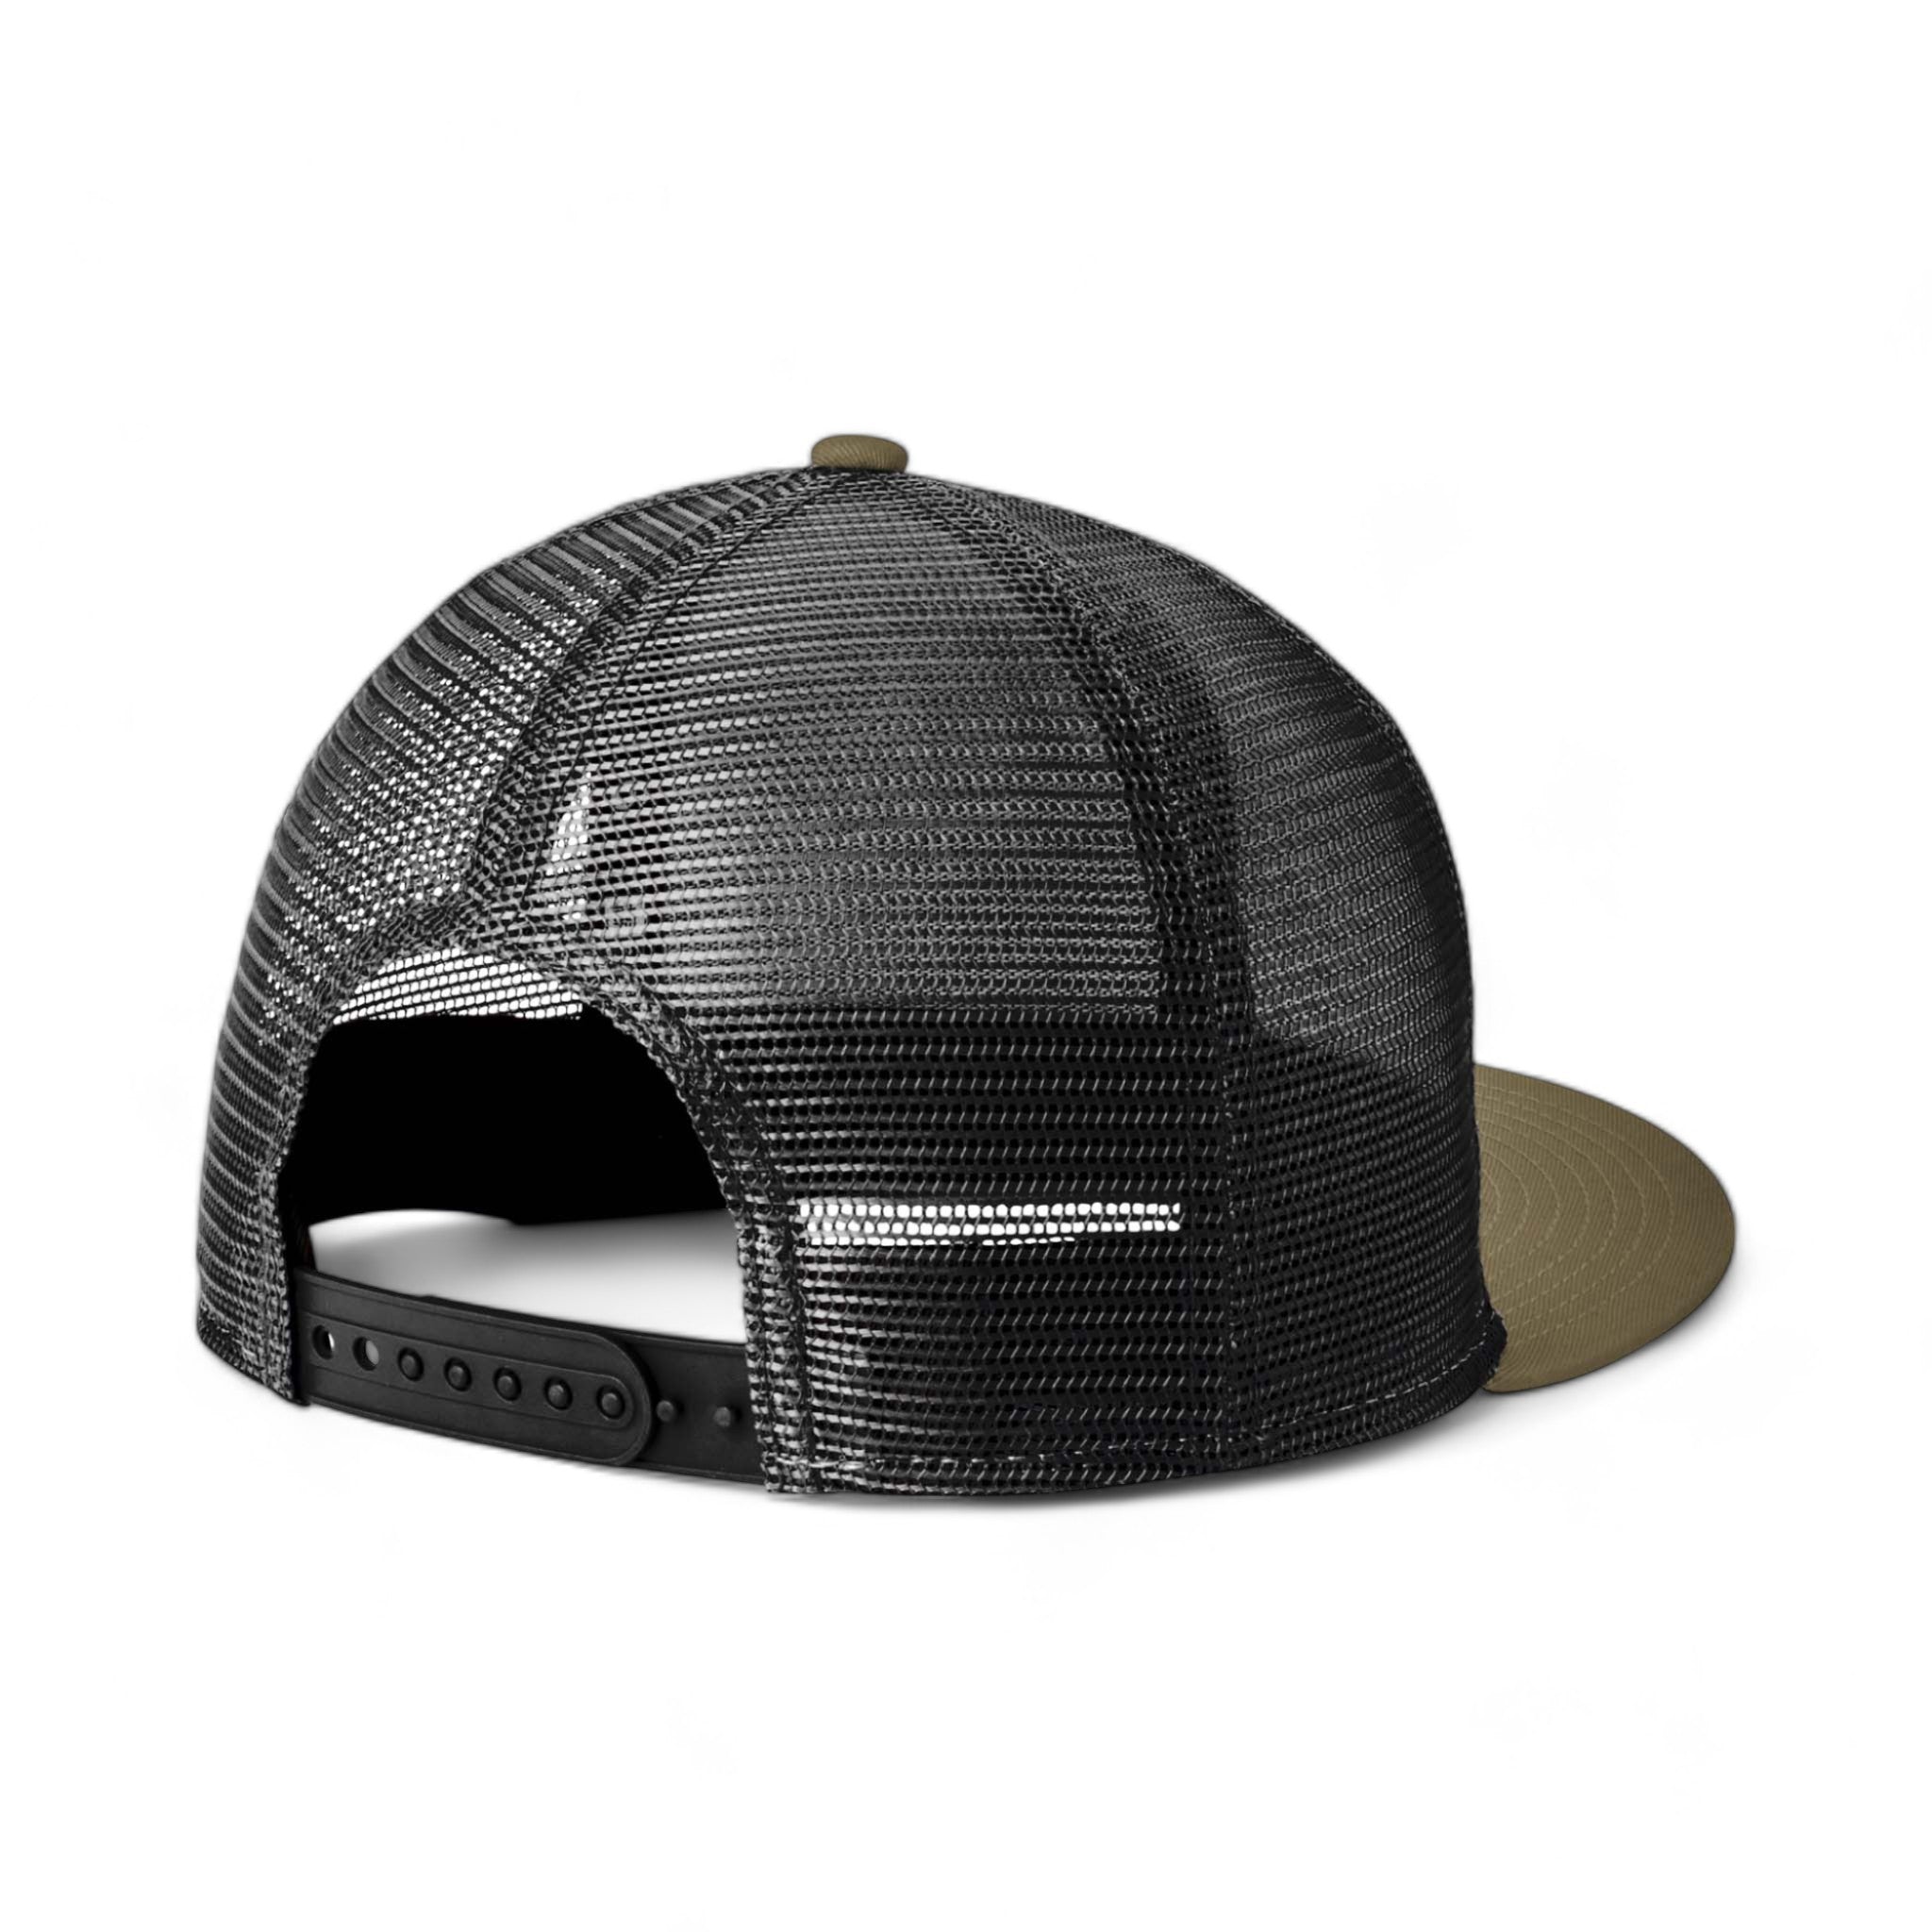 Back view of New Era NE4030 custom hat in olive and black